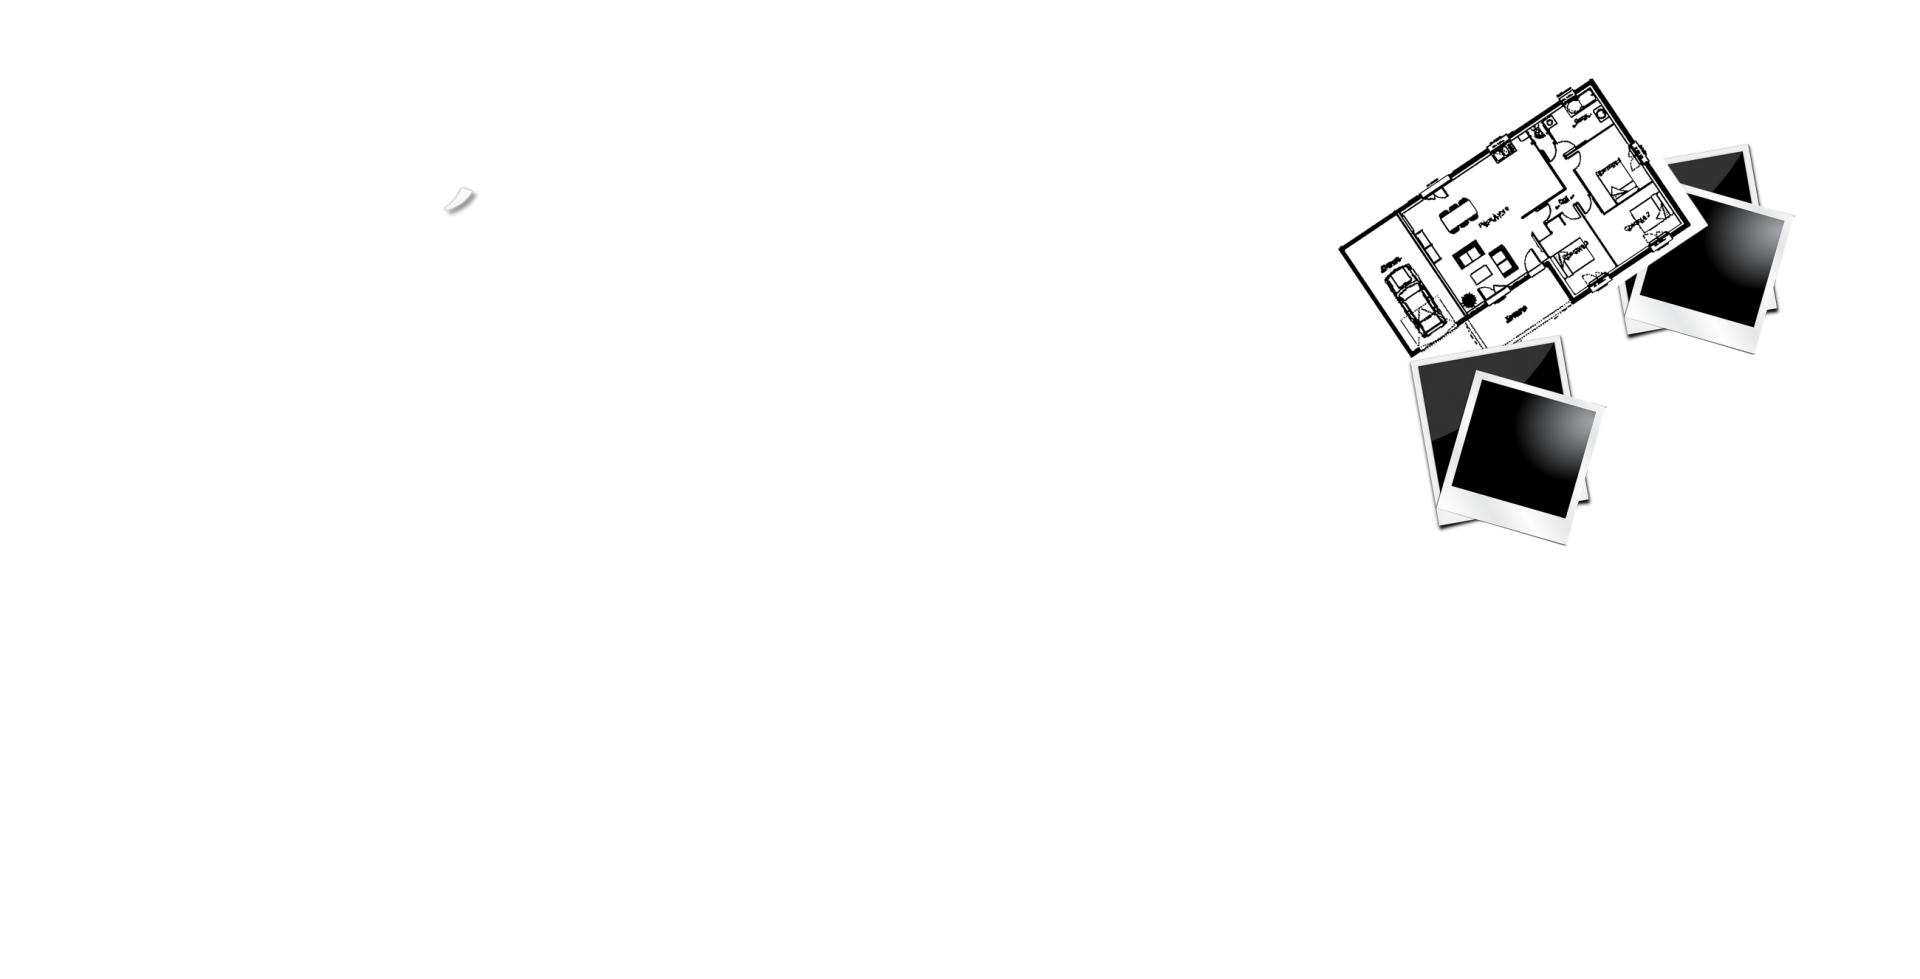 sandrine martina geobiologie sur photos et plans